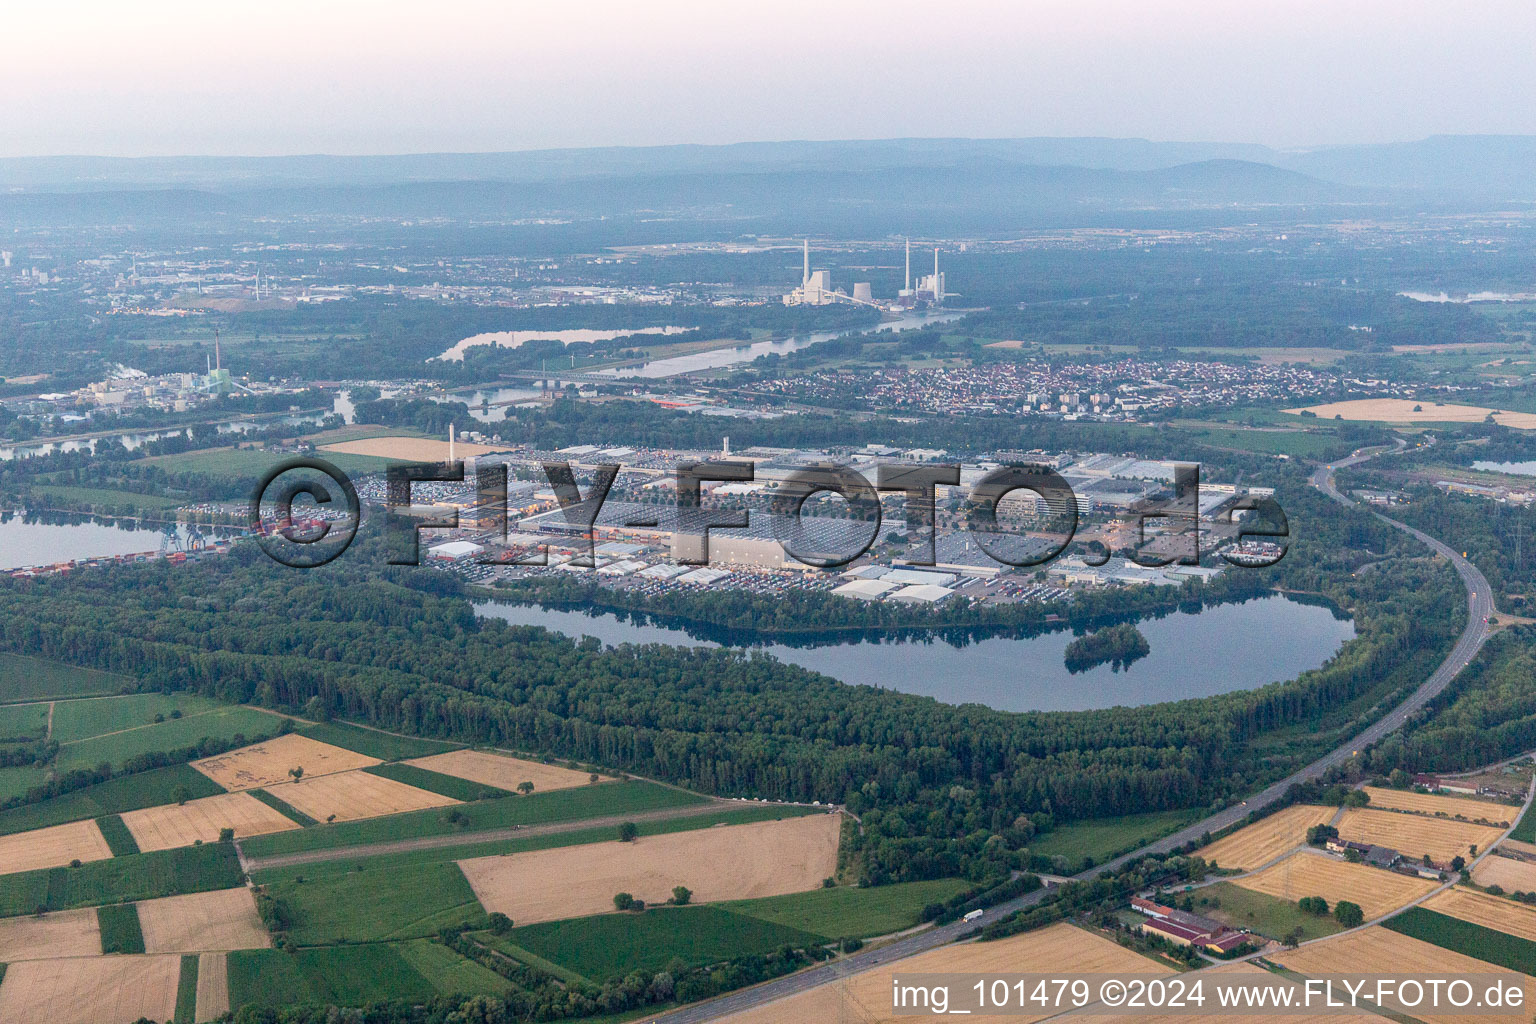 Drone image of Wörth am Rhein in the state Rhineland-Palatinate, Germany